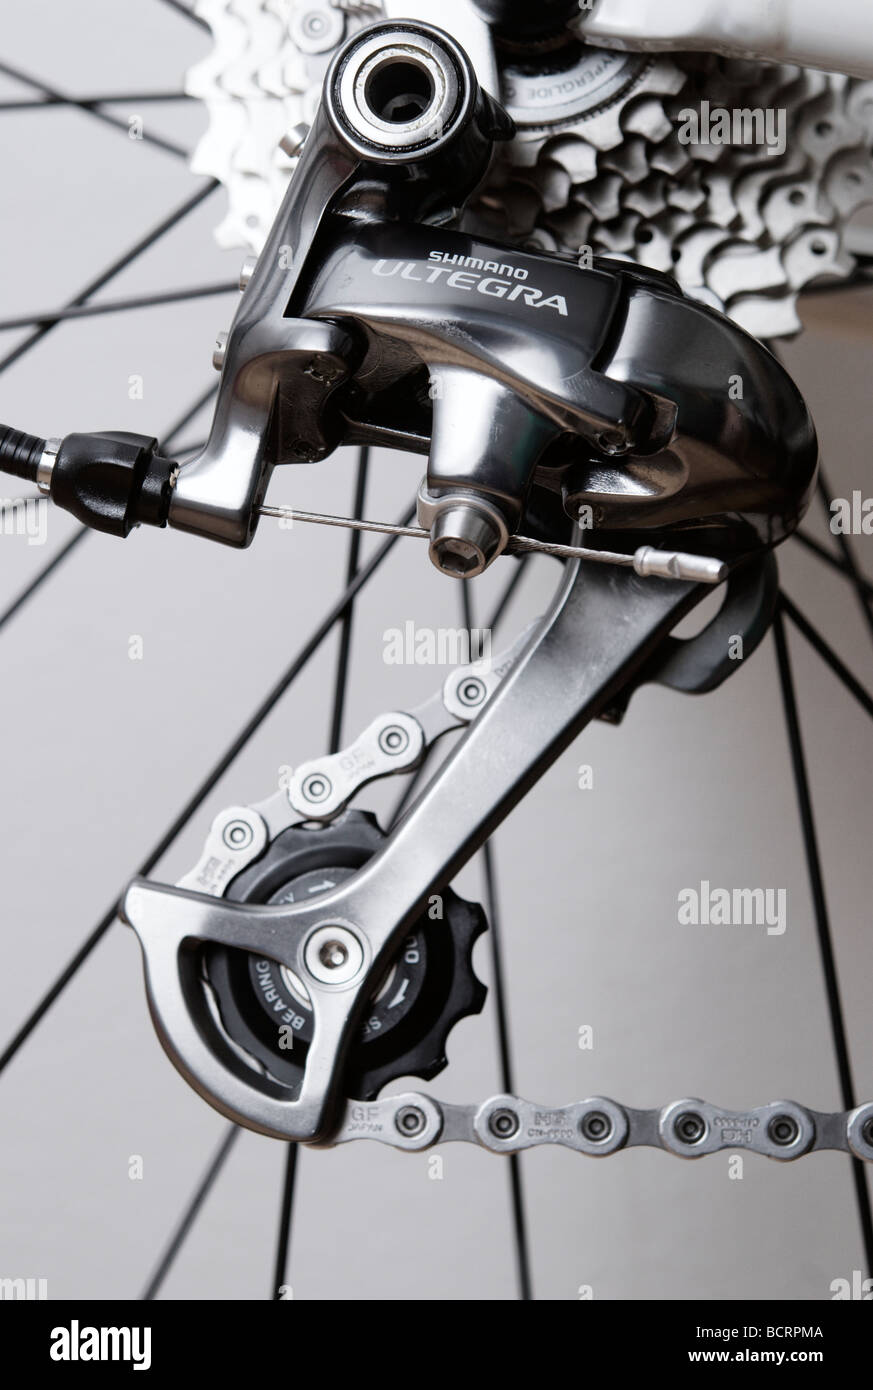 Bicycle detail Stock Photo